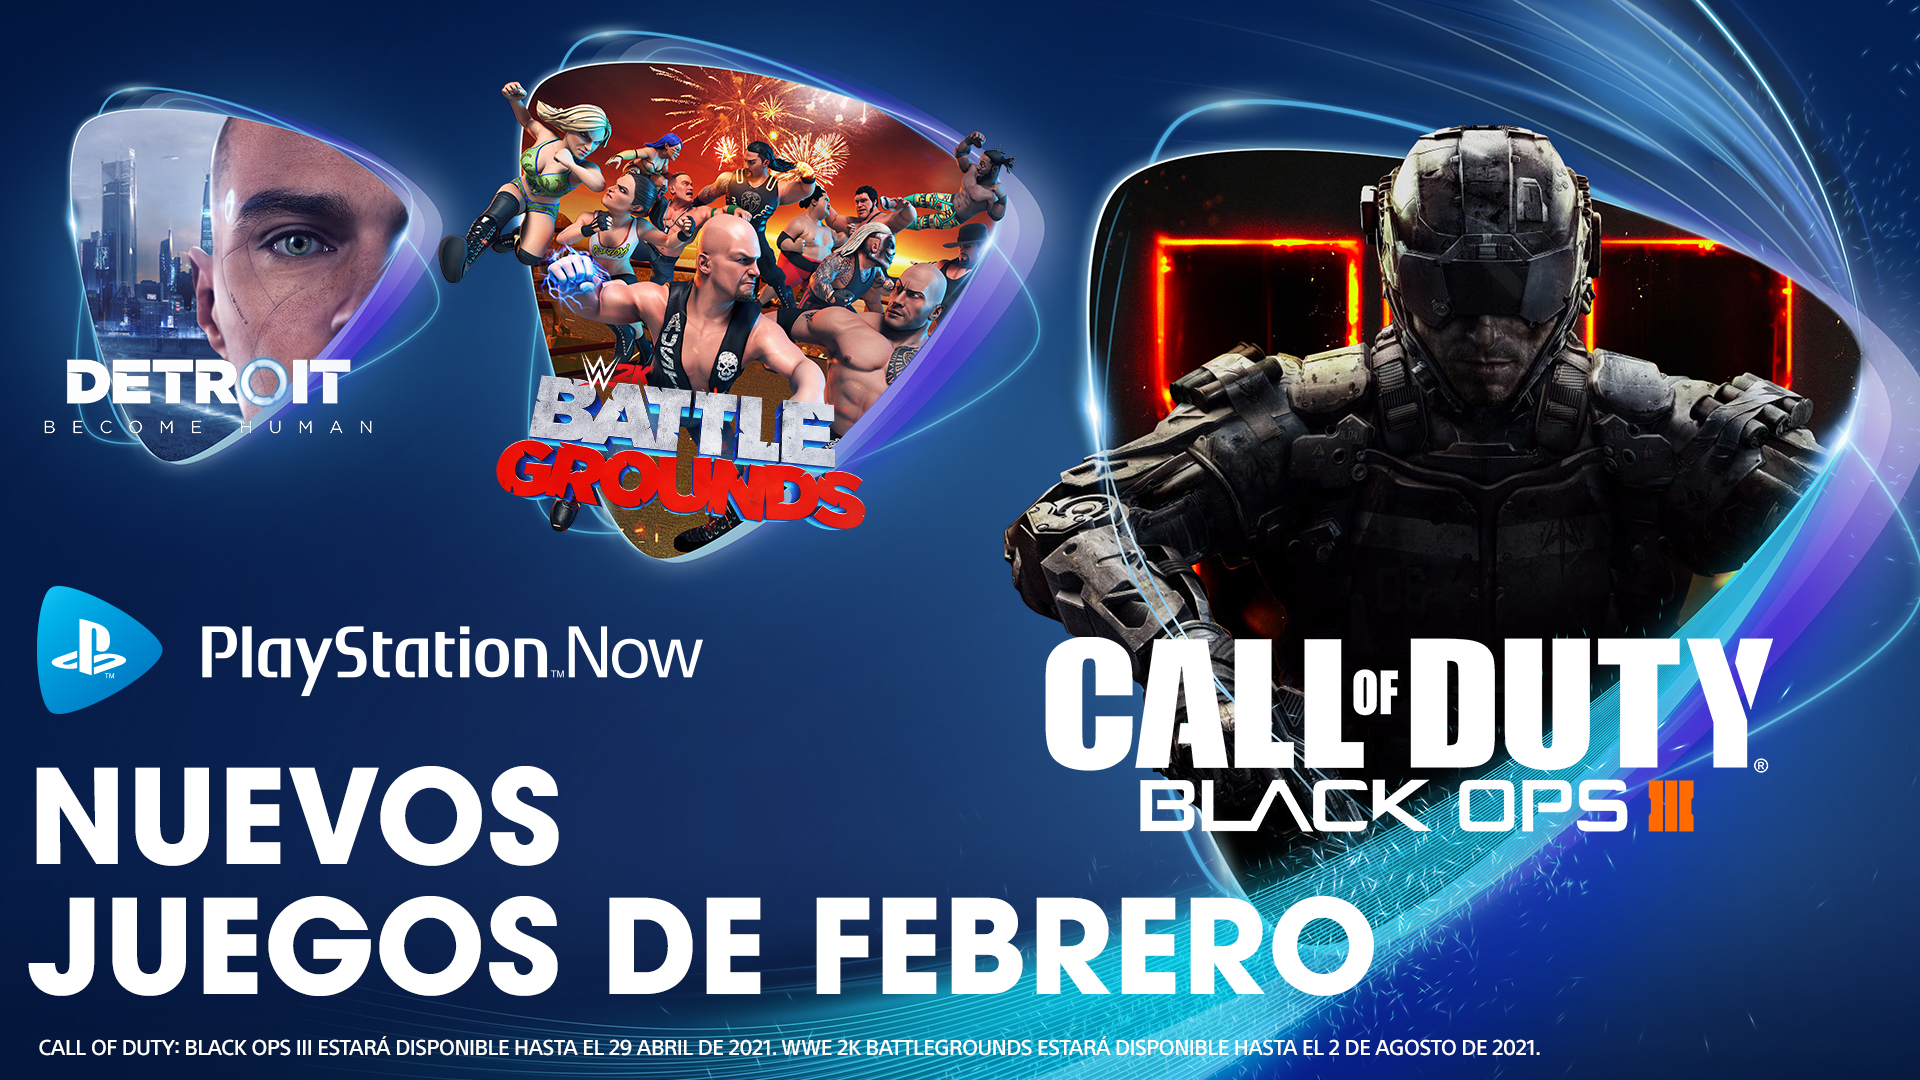 Call of Duty: Black Ops III, WWE 2K Battlegrounds y Detroit: Become Human entre las novedades de PlayStation Now en febrero